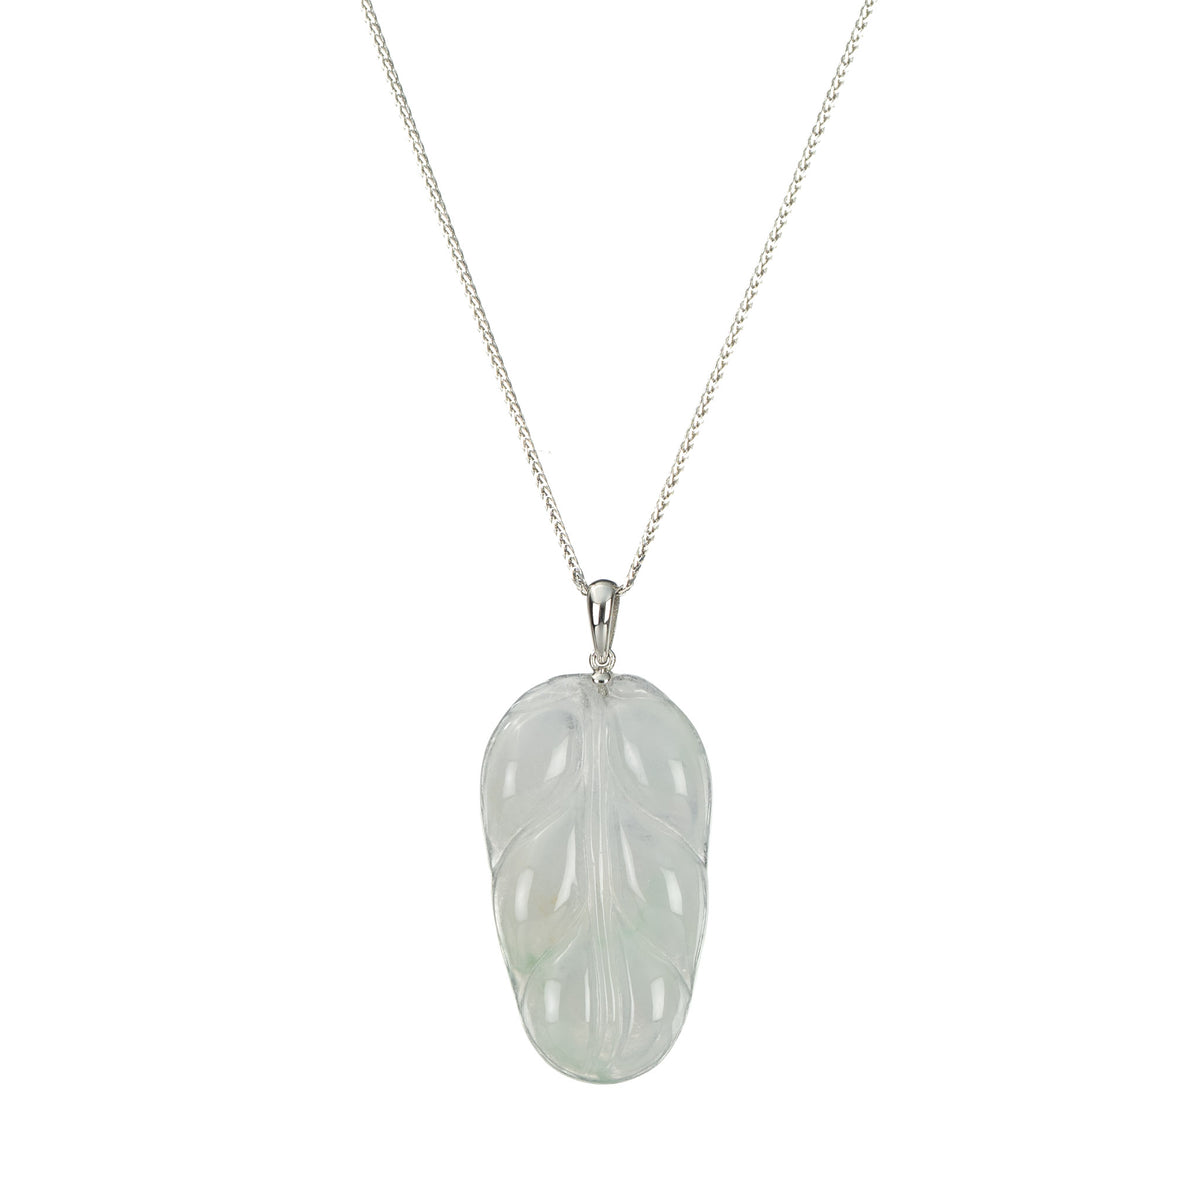 Highly Translucent Jade Leaf Pendant with 18K White Gold